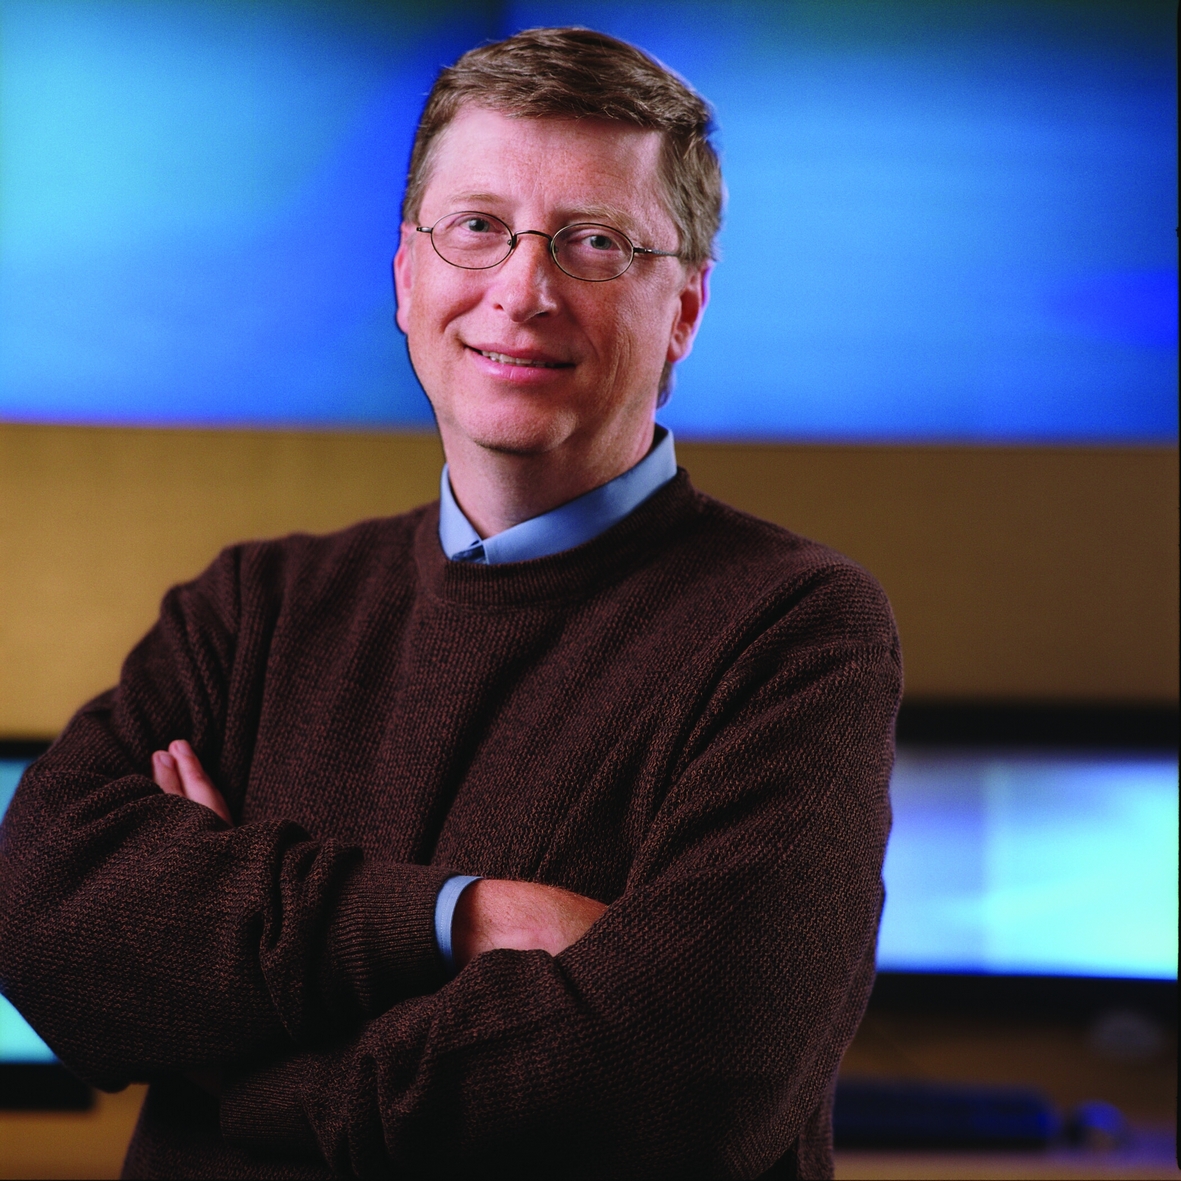 Risorsa grafica - foto, screenshot o immagine in genere - relativa ai contenuti pubblicati da nvidiazone.it | Nome immagine: Bill_Gates.jpg